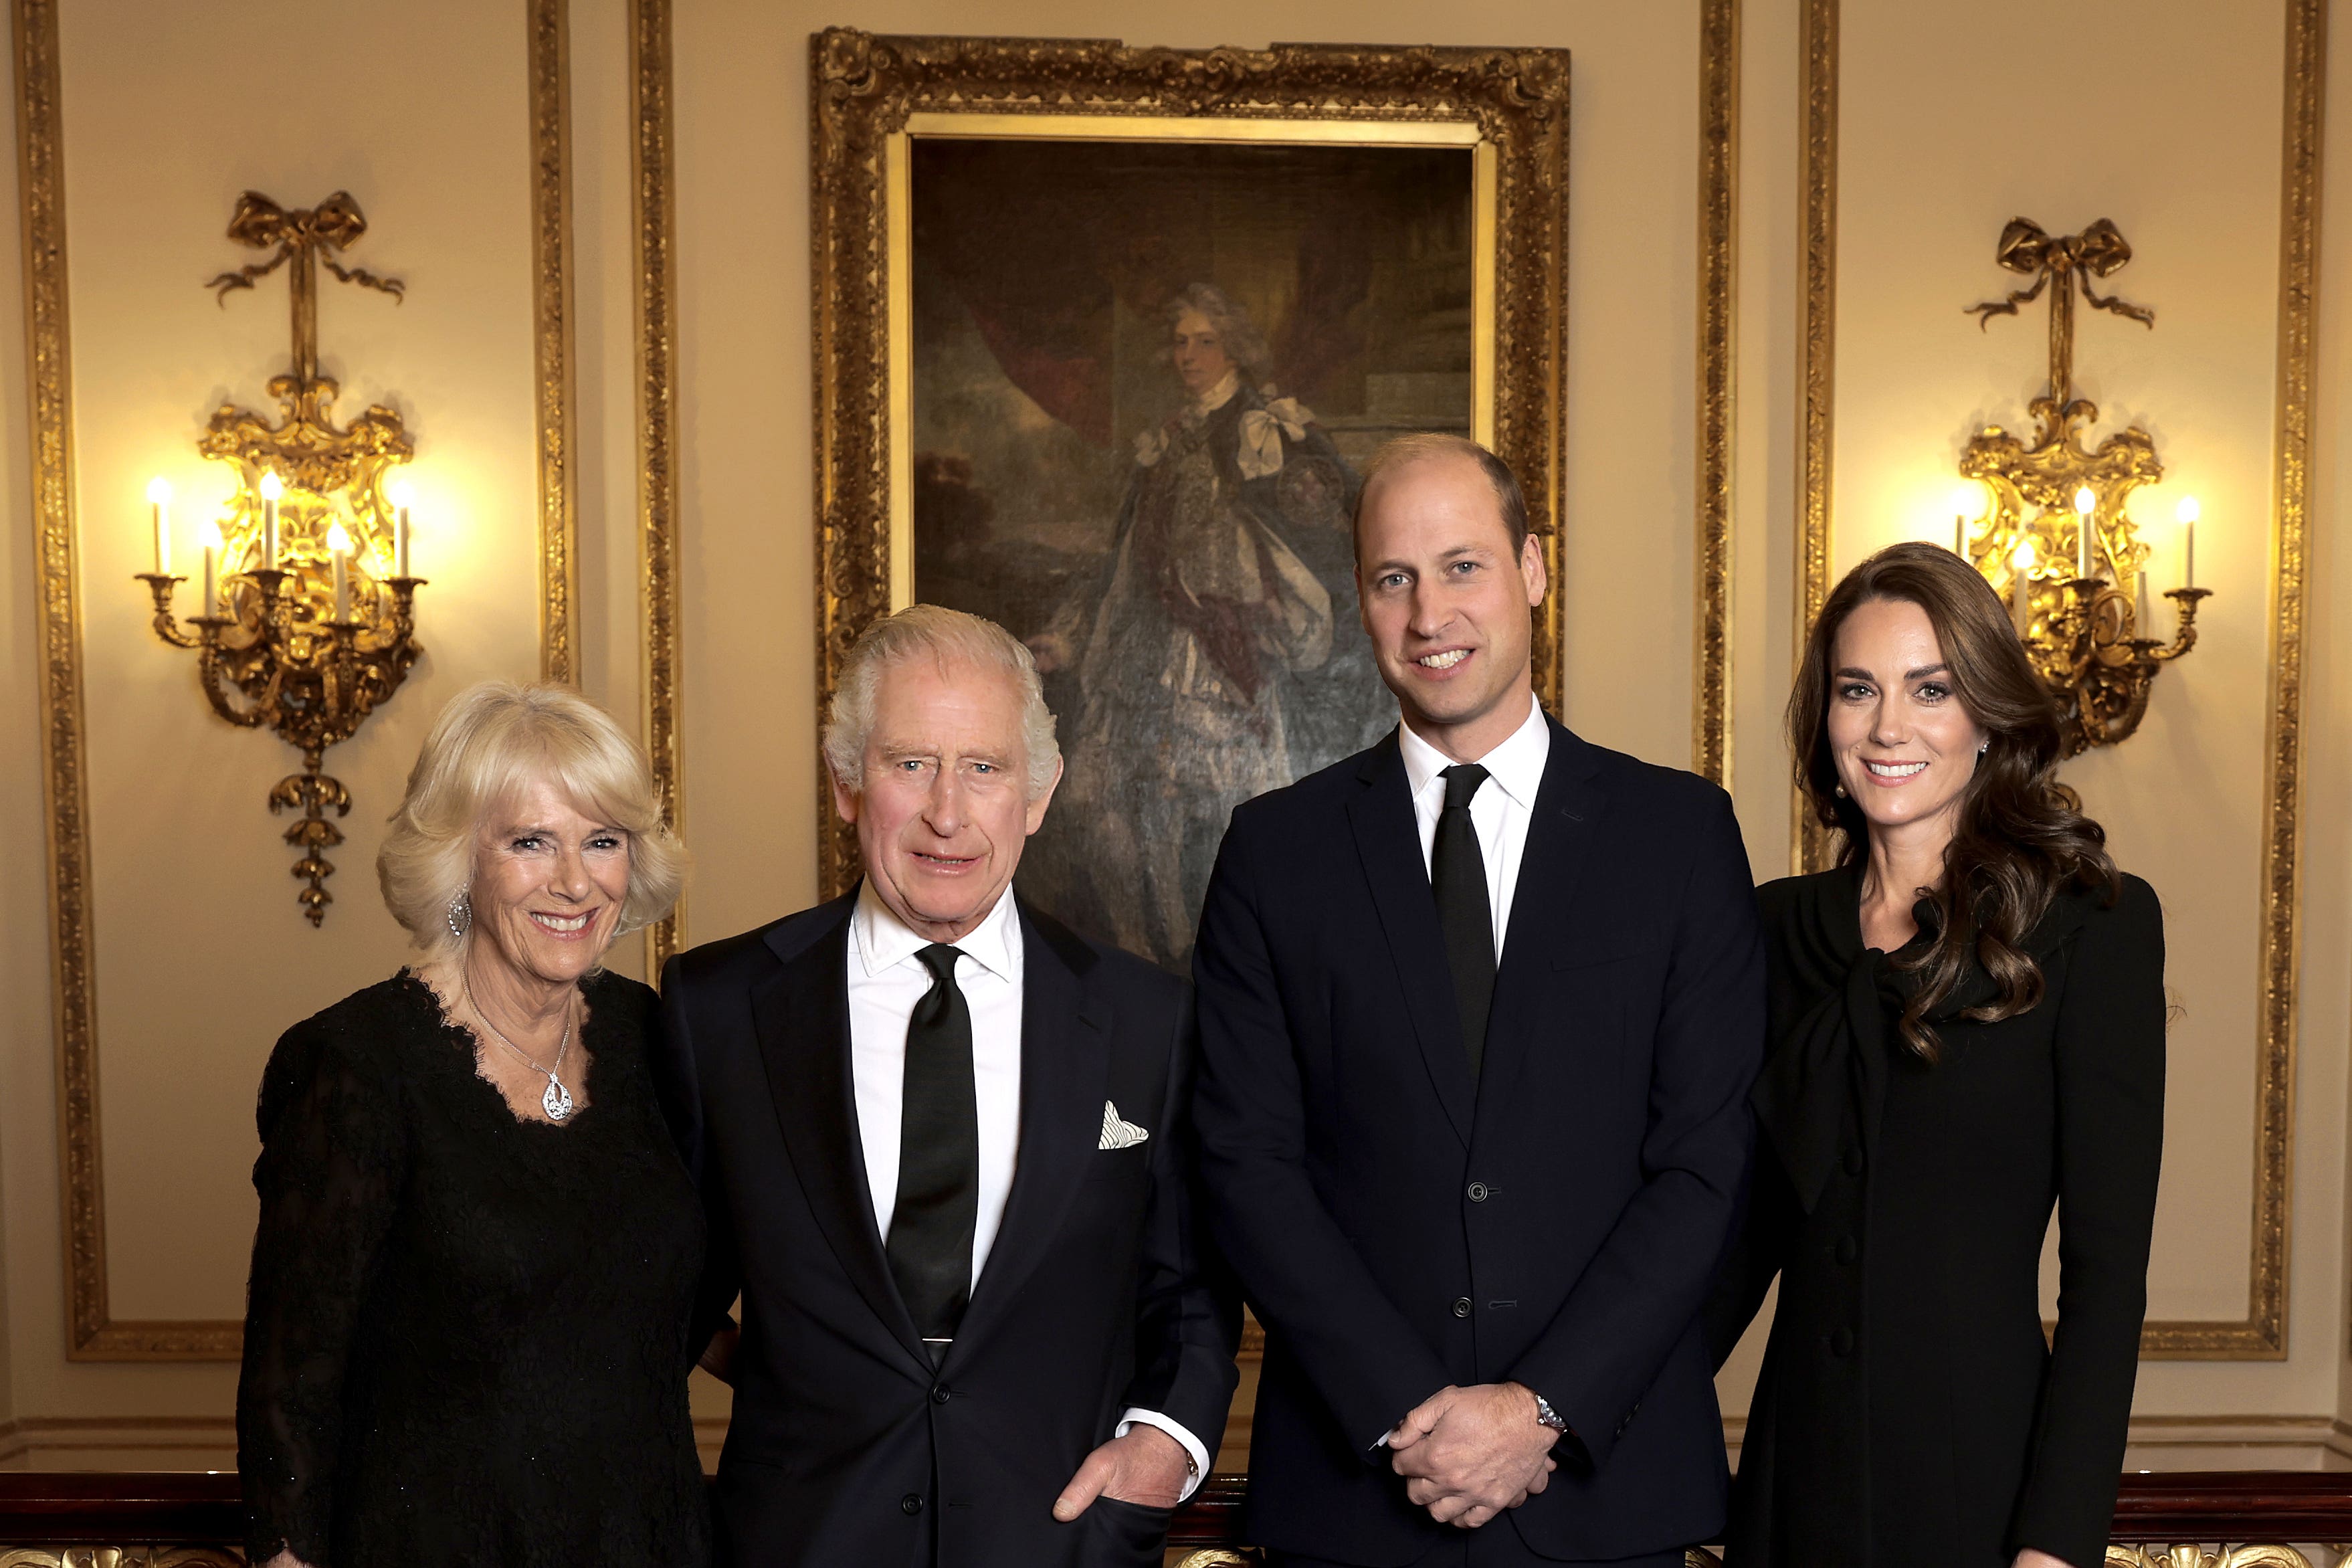 The image was taken at Buckingham Palace on 18 September